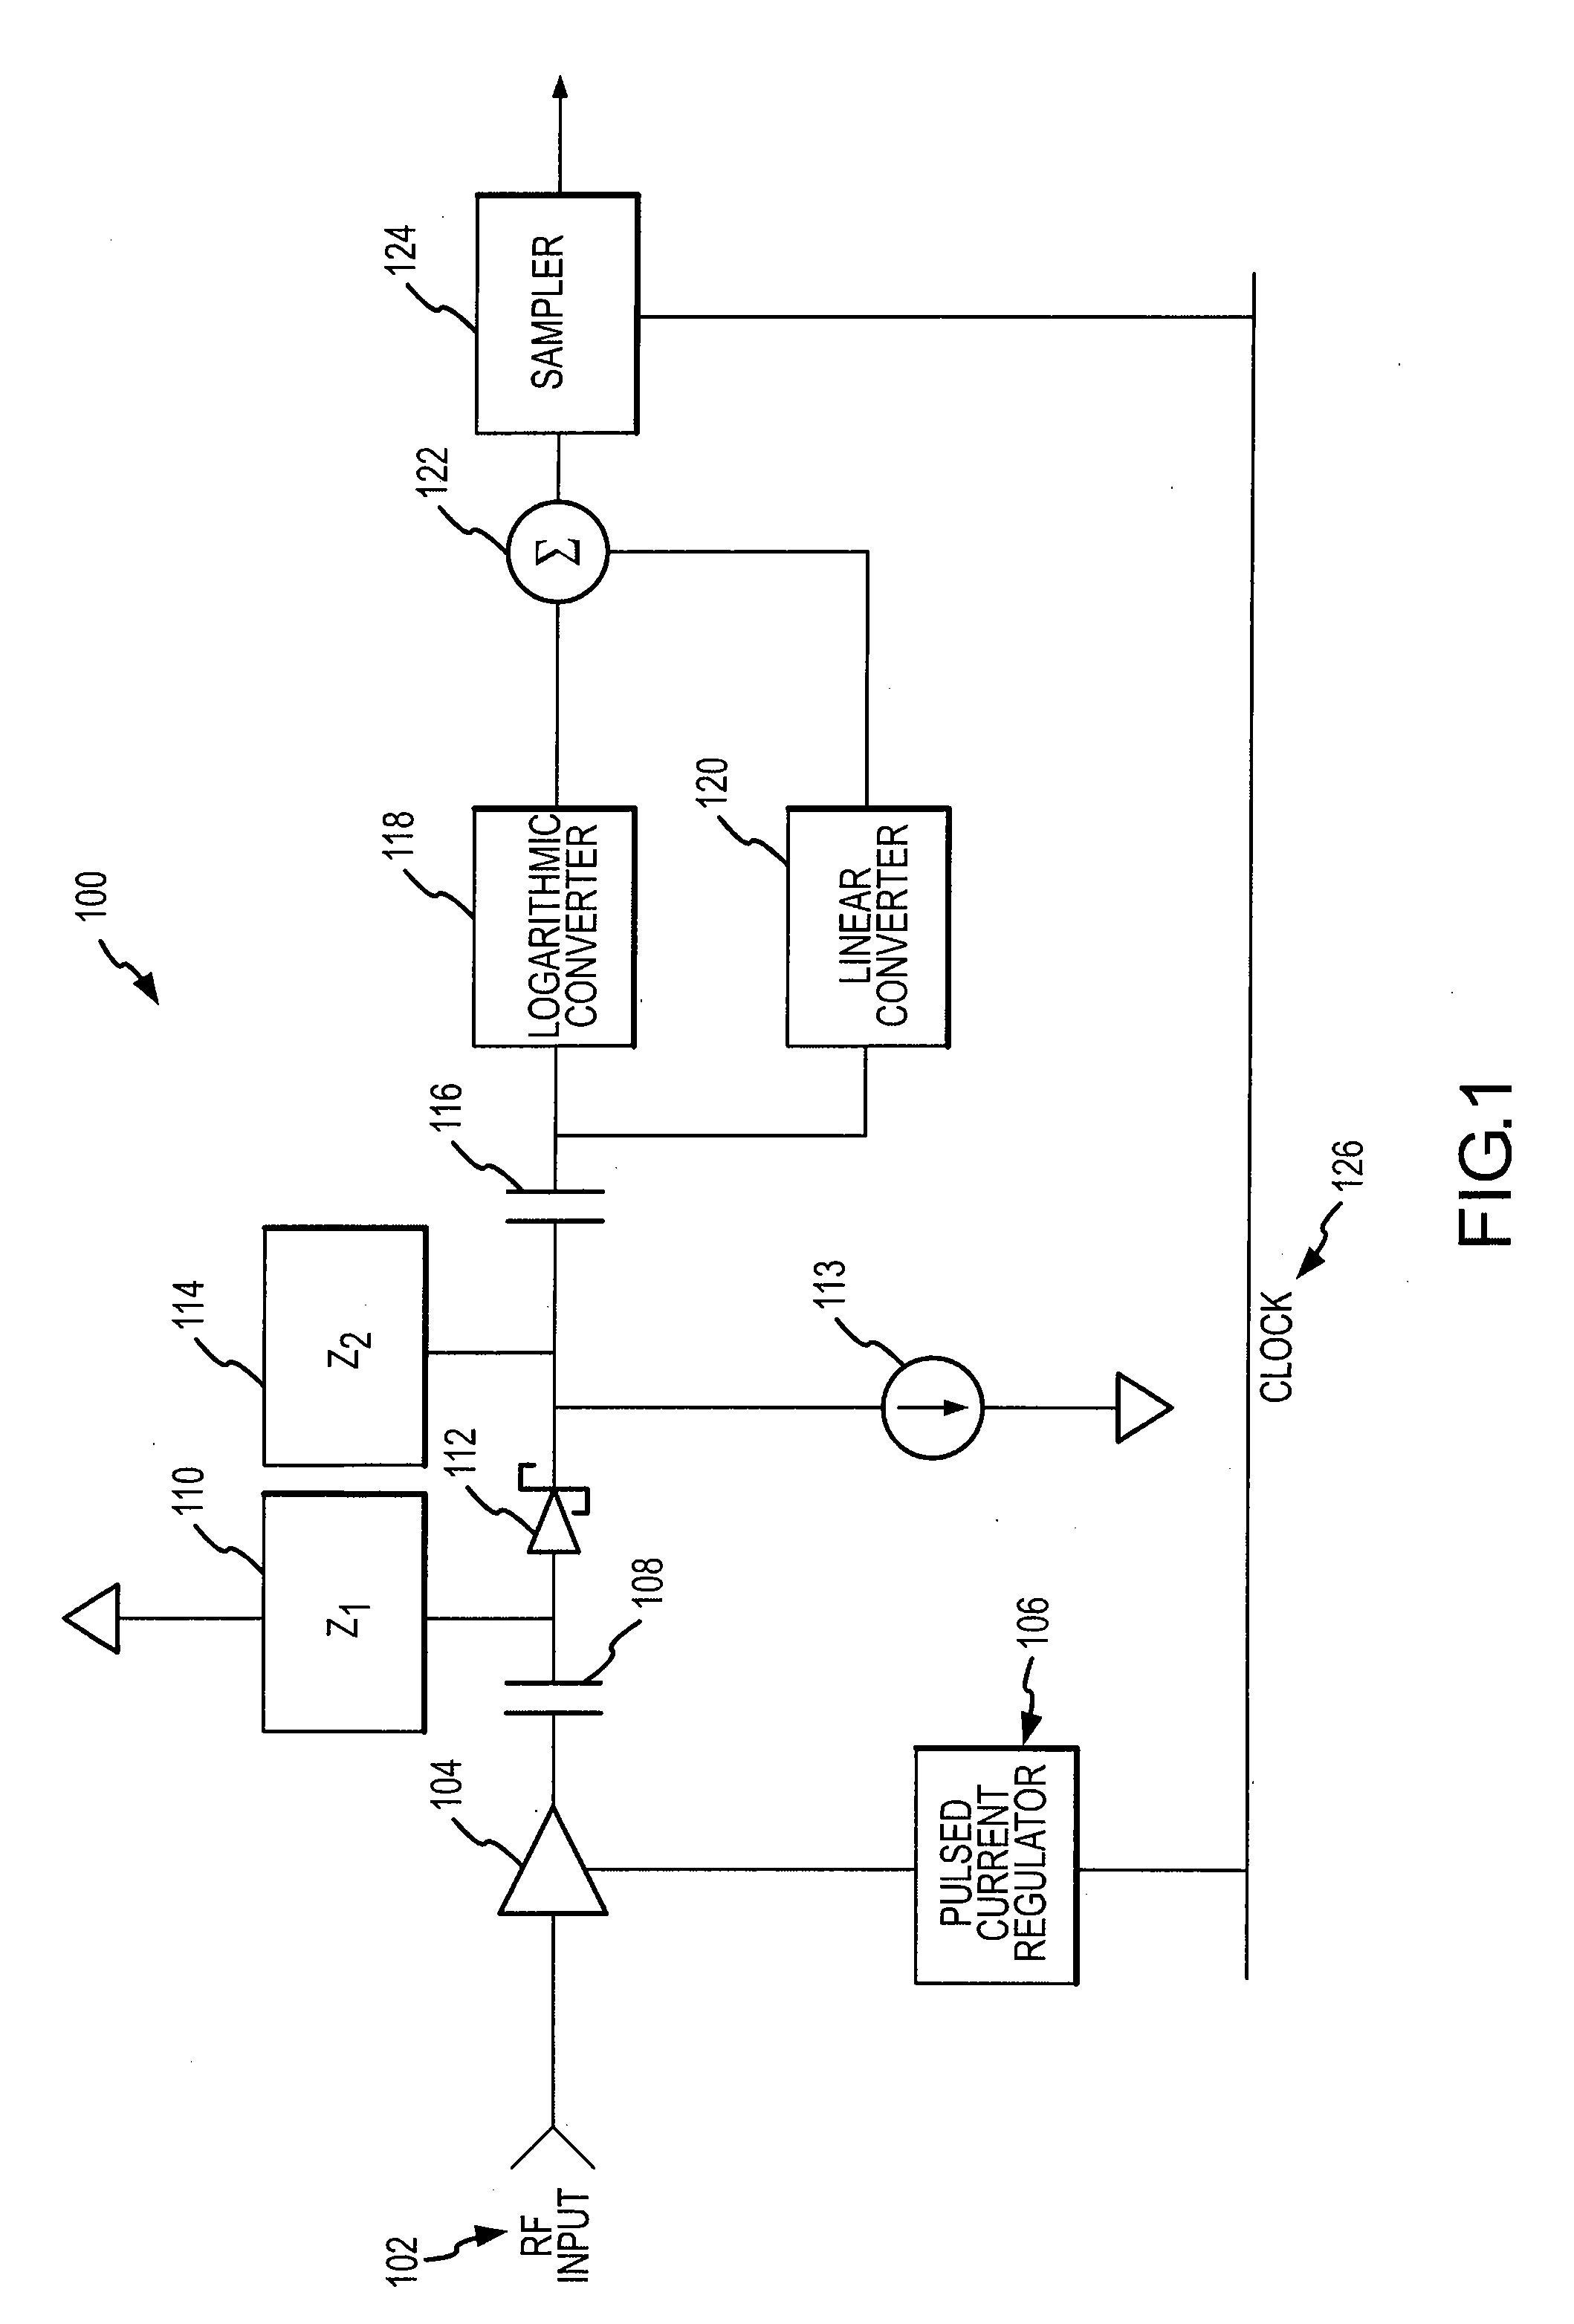 RF power sensor with chopping amplifier